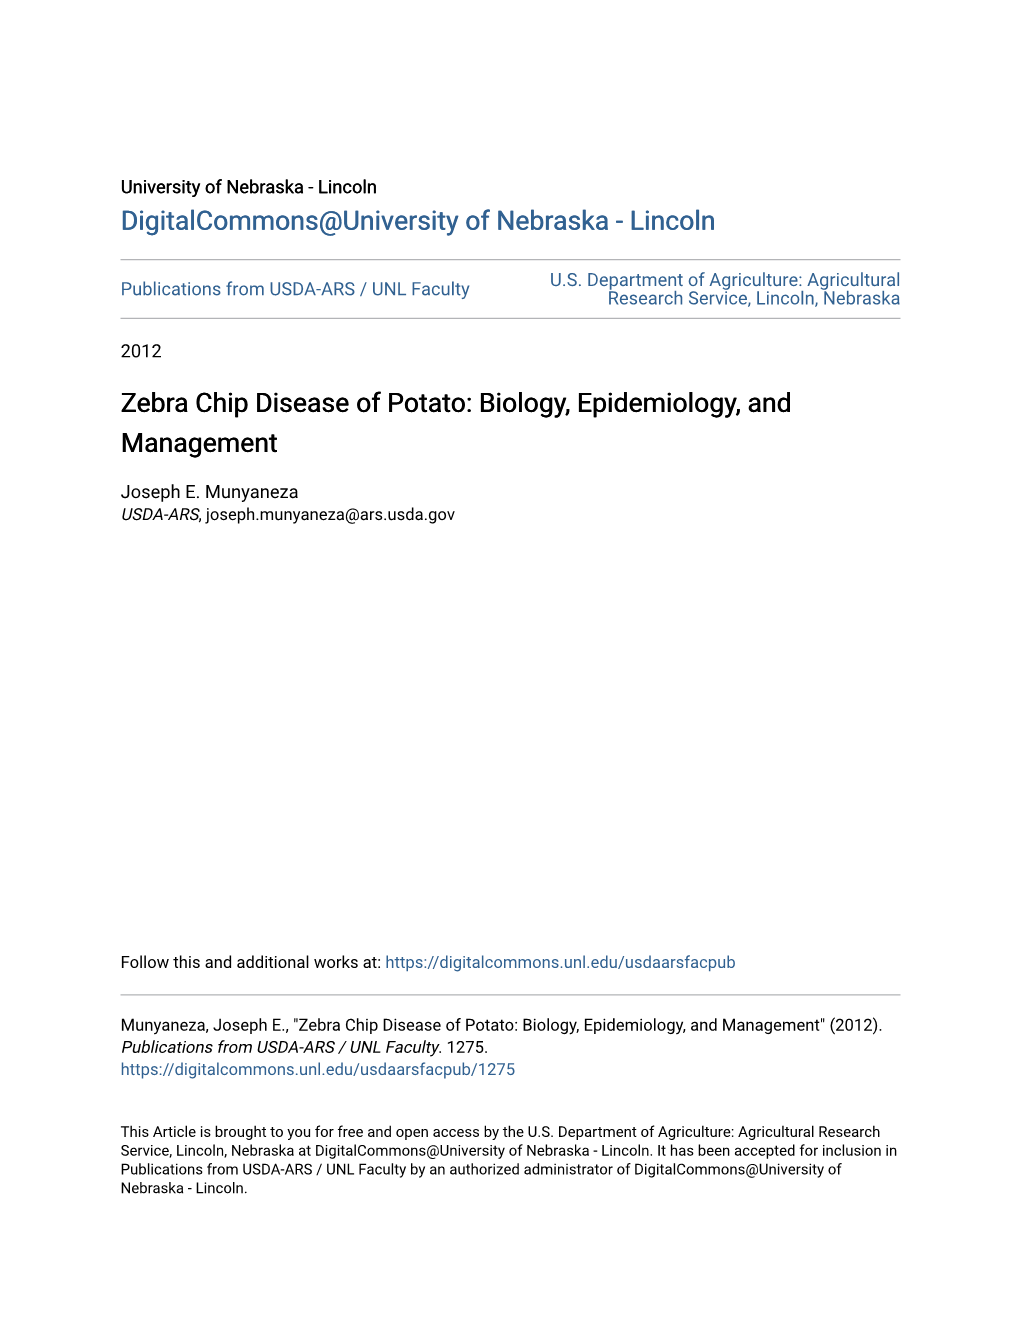 Zebra Chip Disease of Potato: Biology, Epidemiology, and Management